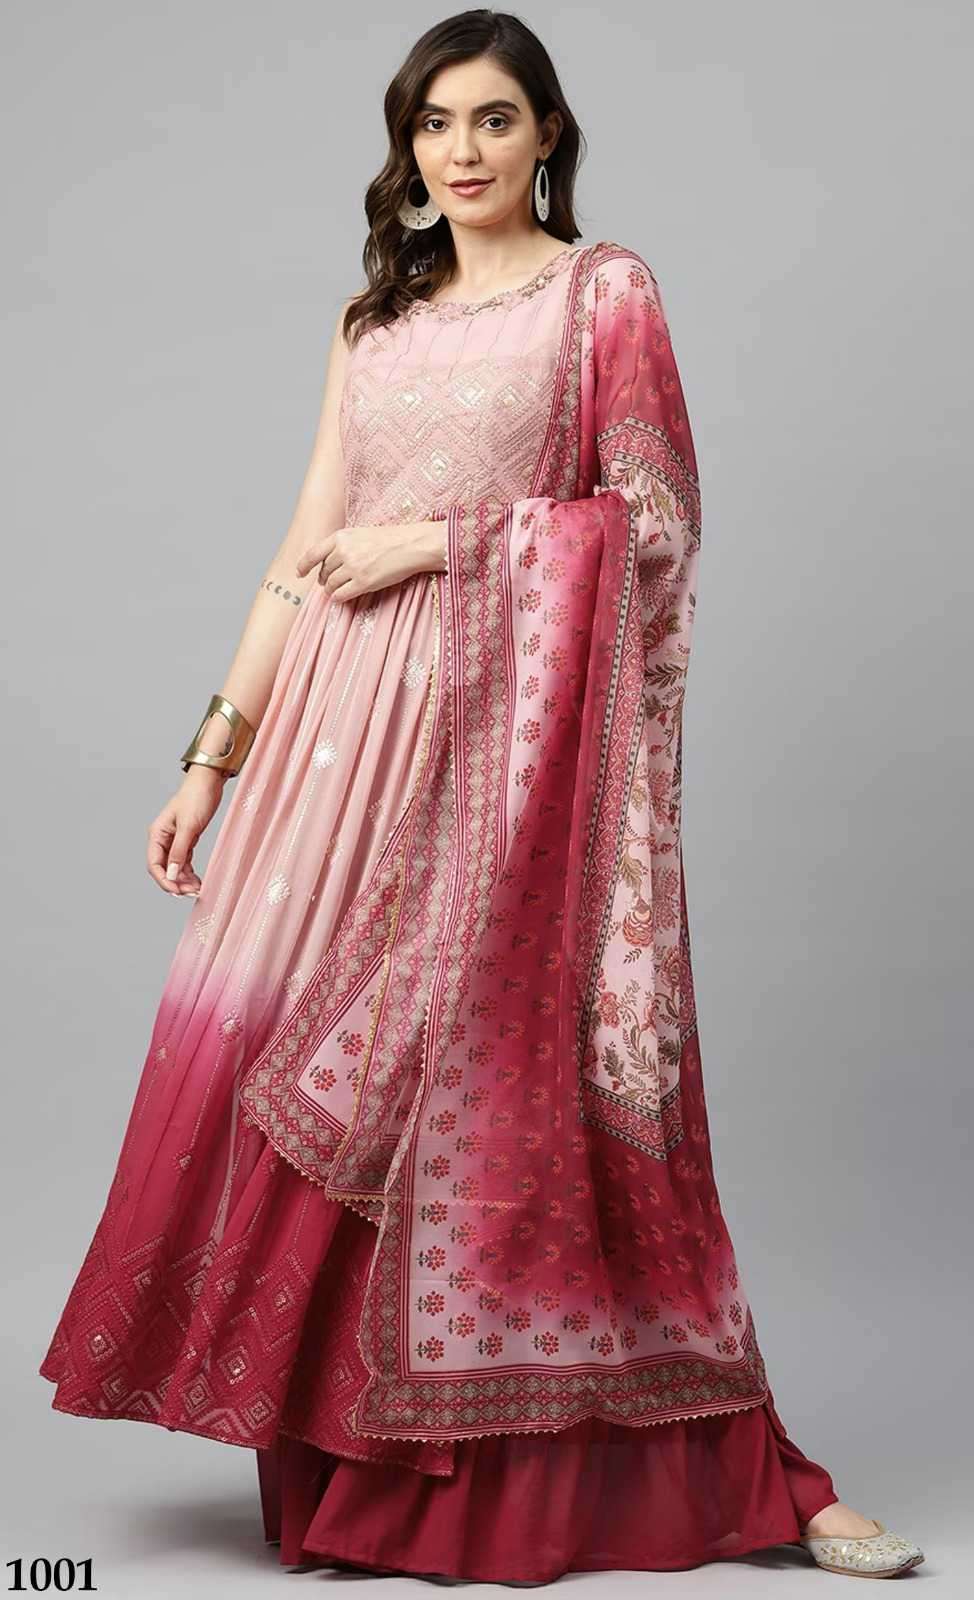 Alfaaz Faiza Latest Designer Sharara Style Dress Wedding Collection